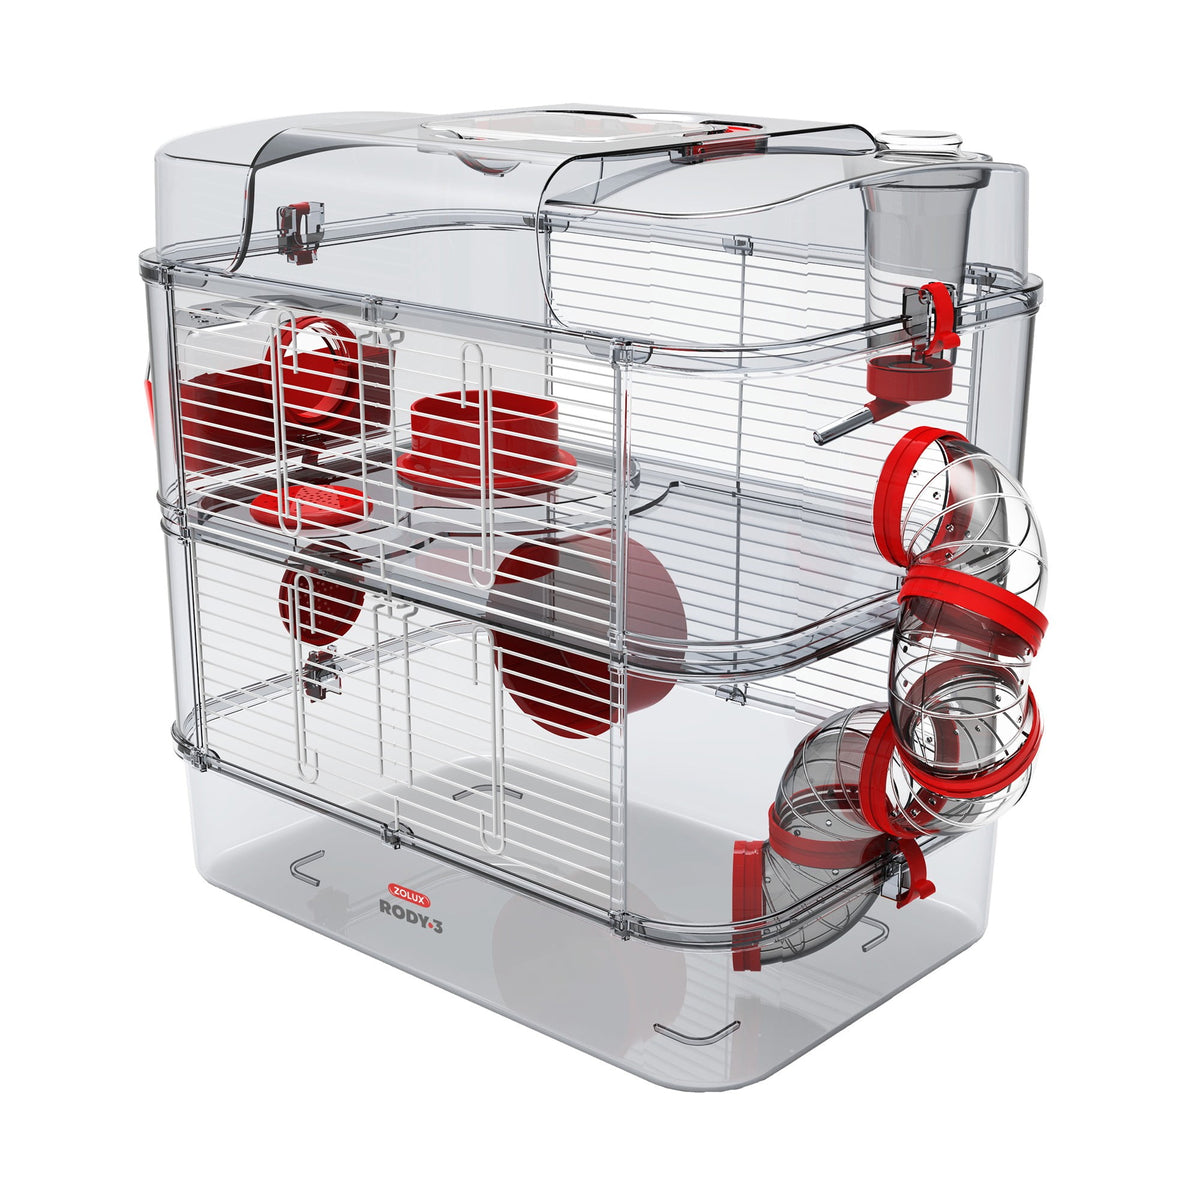 Zolux Rody 3 Duo - Habitat / Cage pour rongeurs - Hamster, Souris